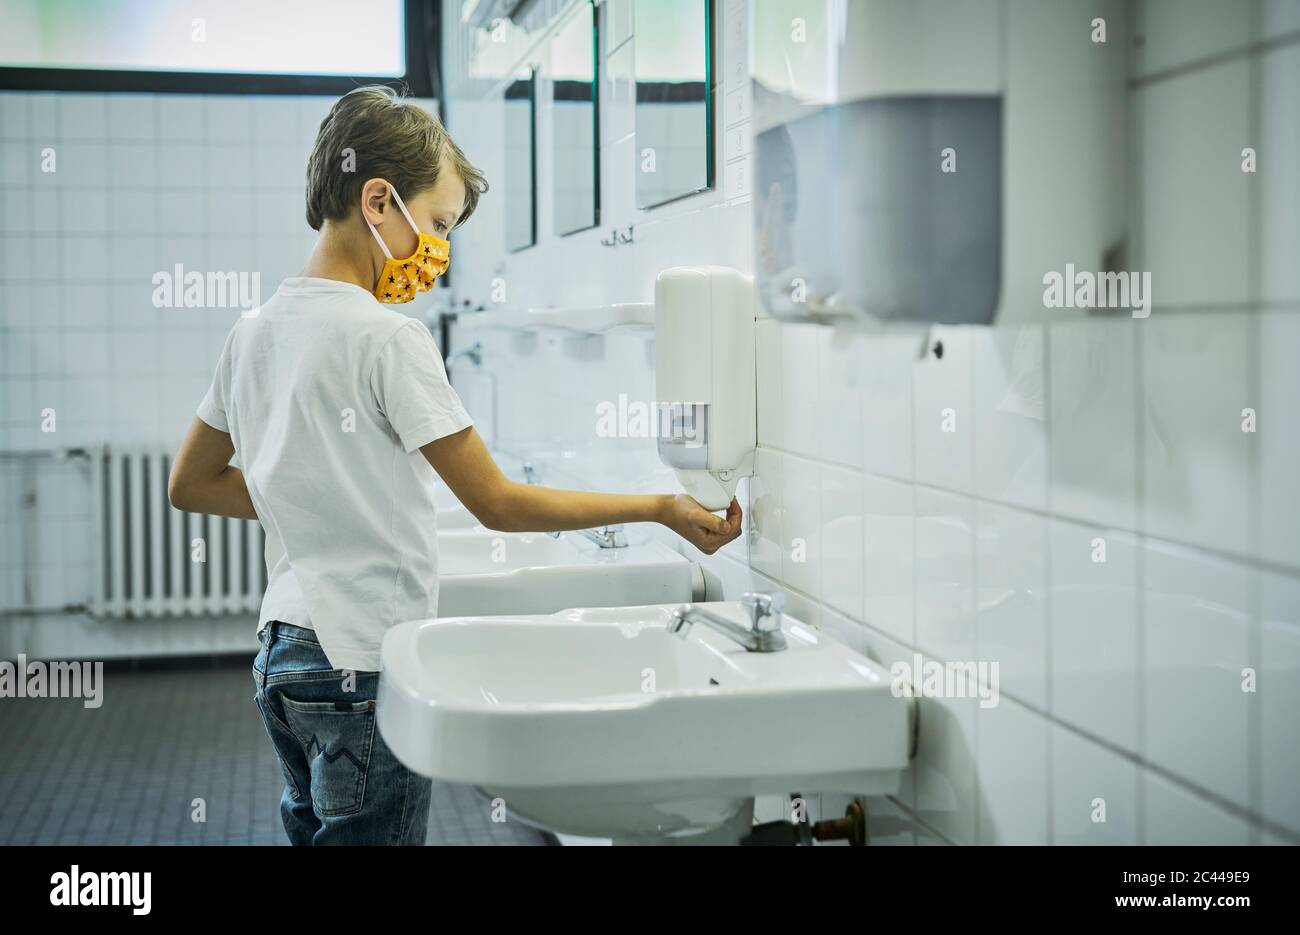 Boy wearing mask on school toilet washing his hands Stock Photo - Alamy